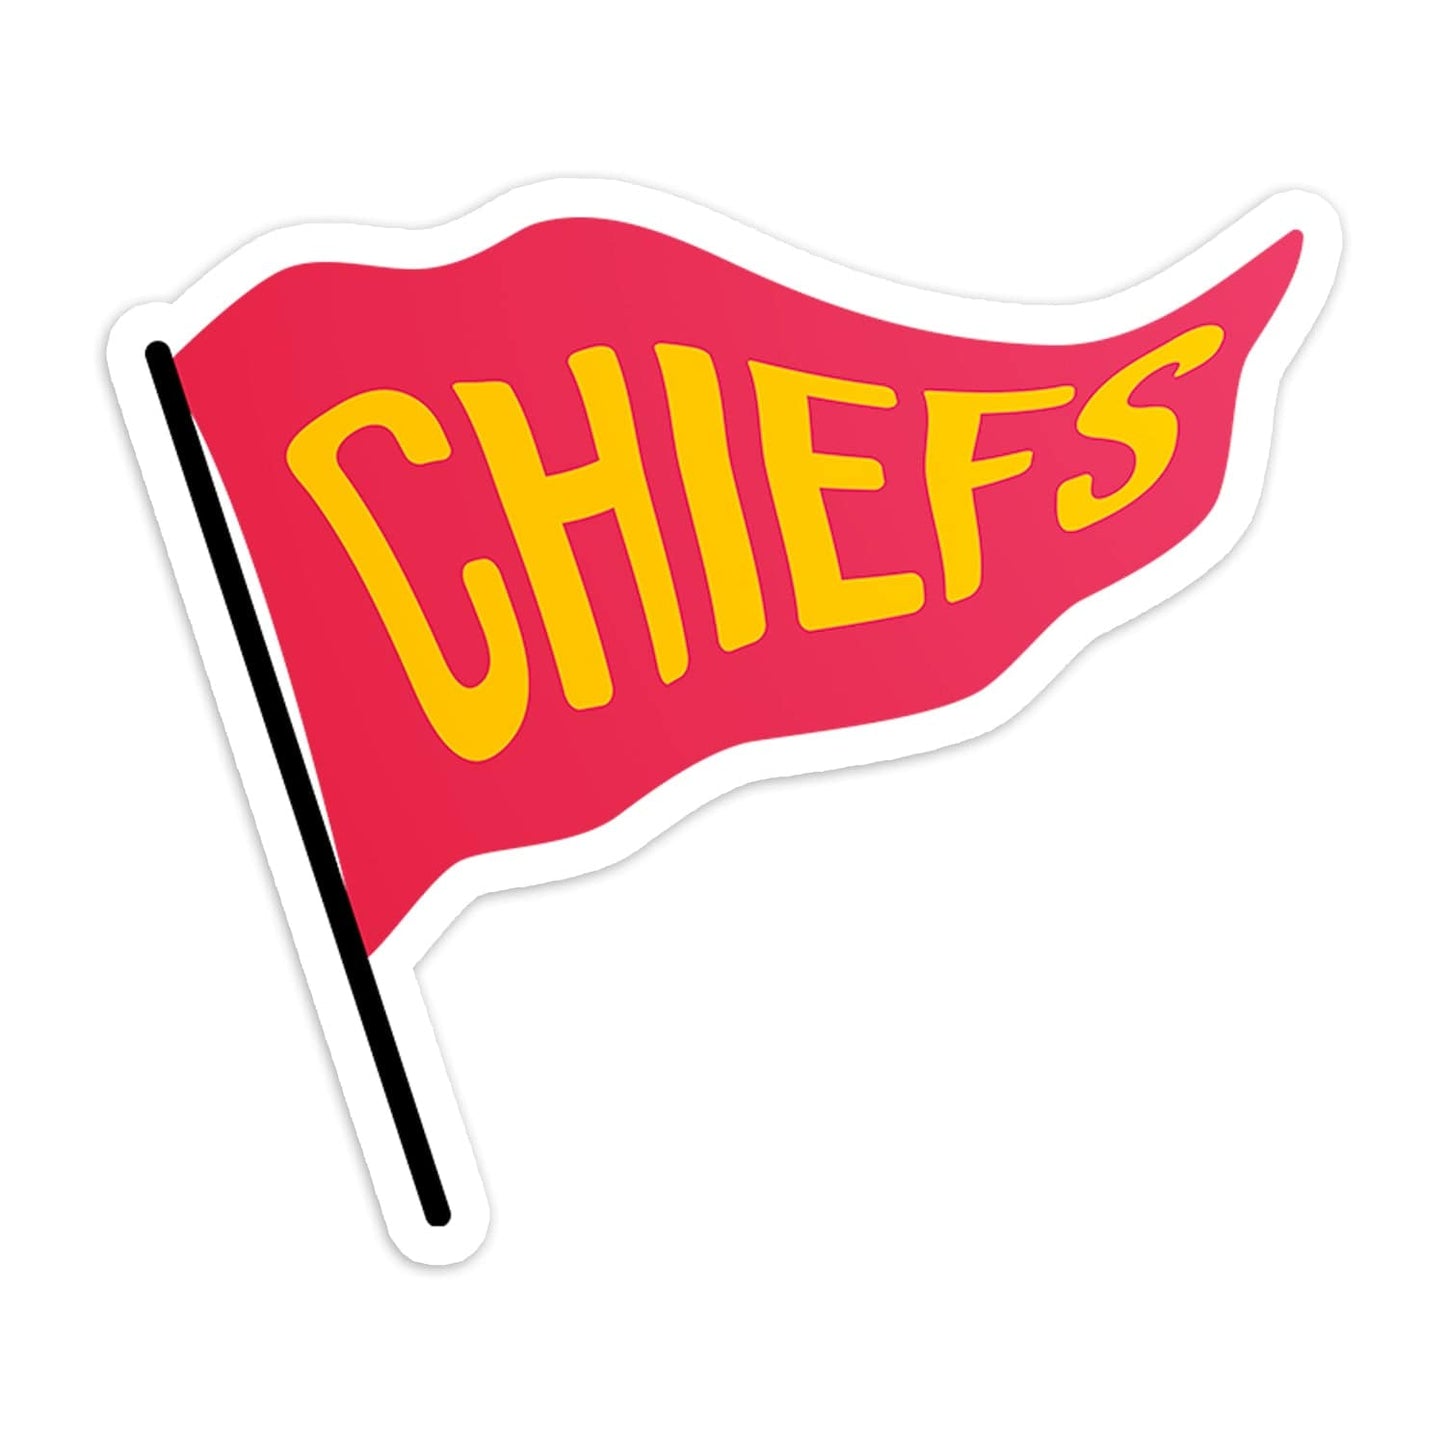 Metallic Kansas City Chiefs Sticker